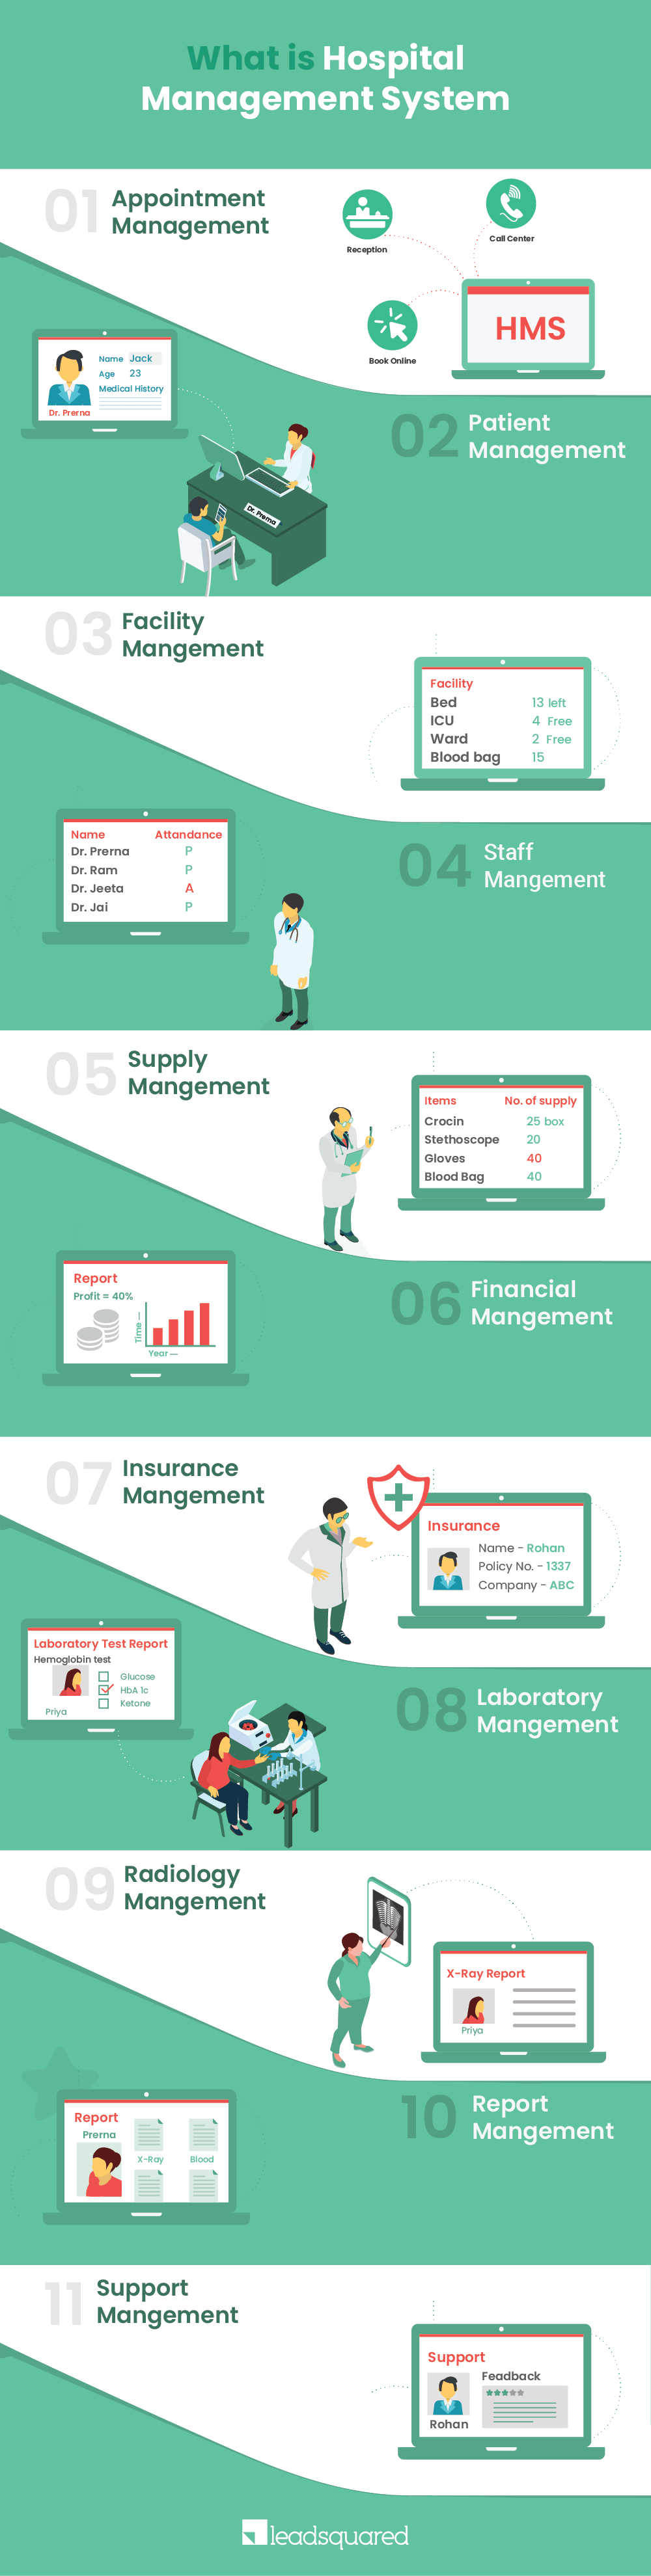 11 components of Hospital Management System 